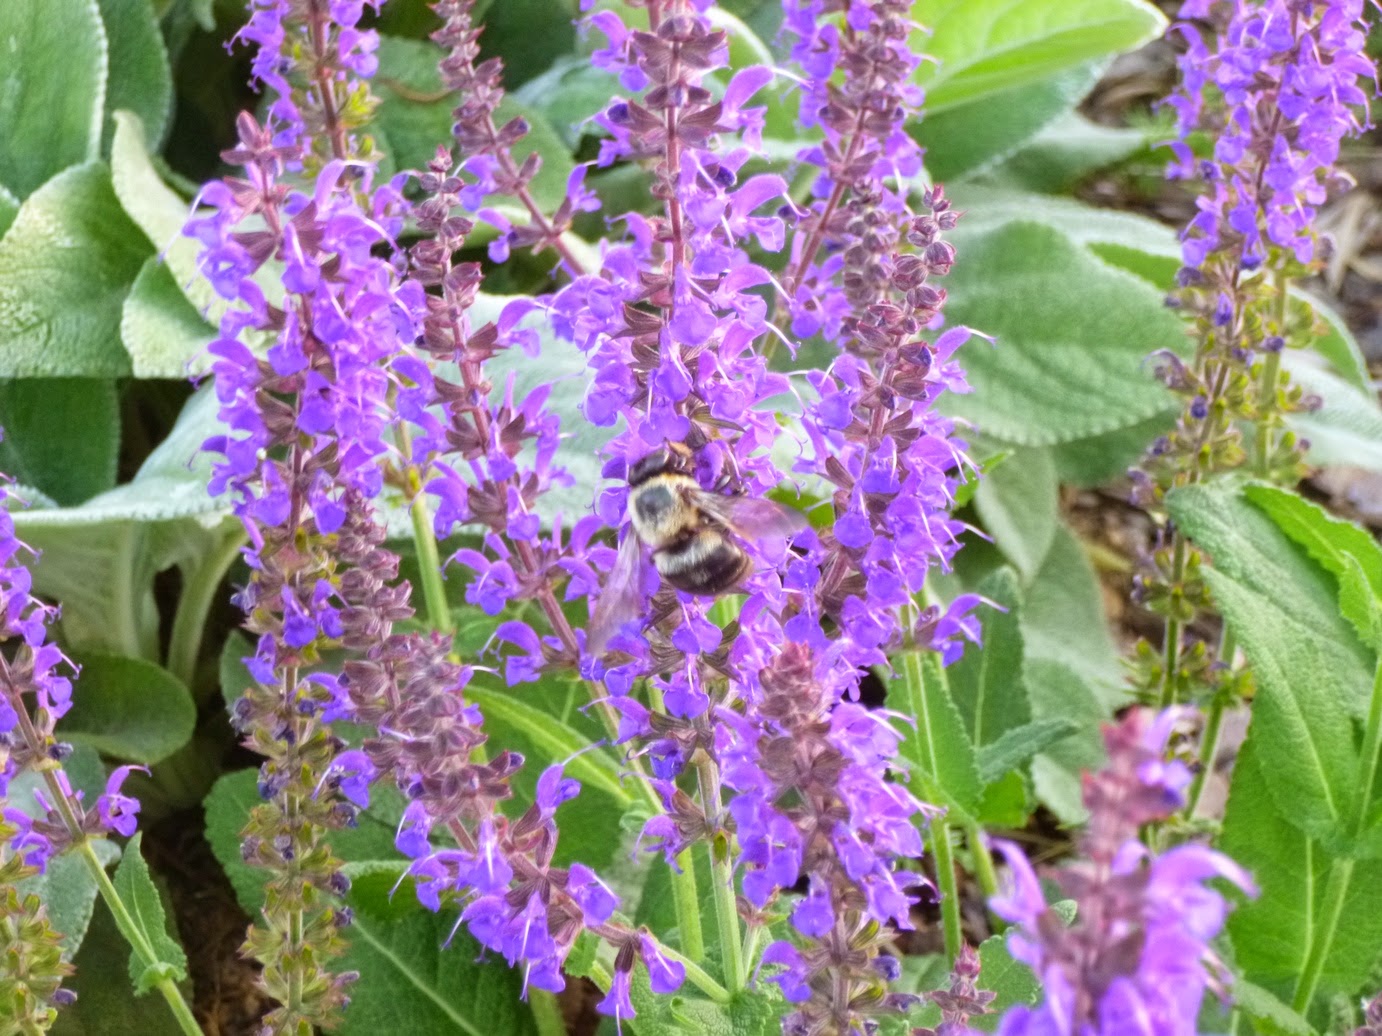 Salvia nemorosa "May Night" and bumblebee 